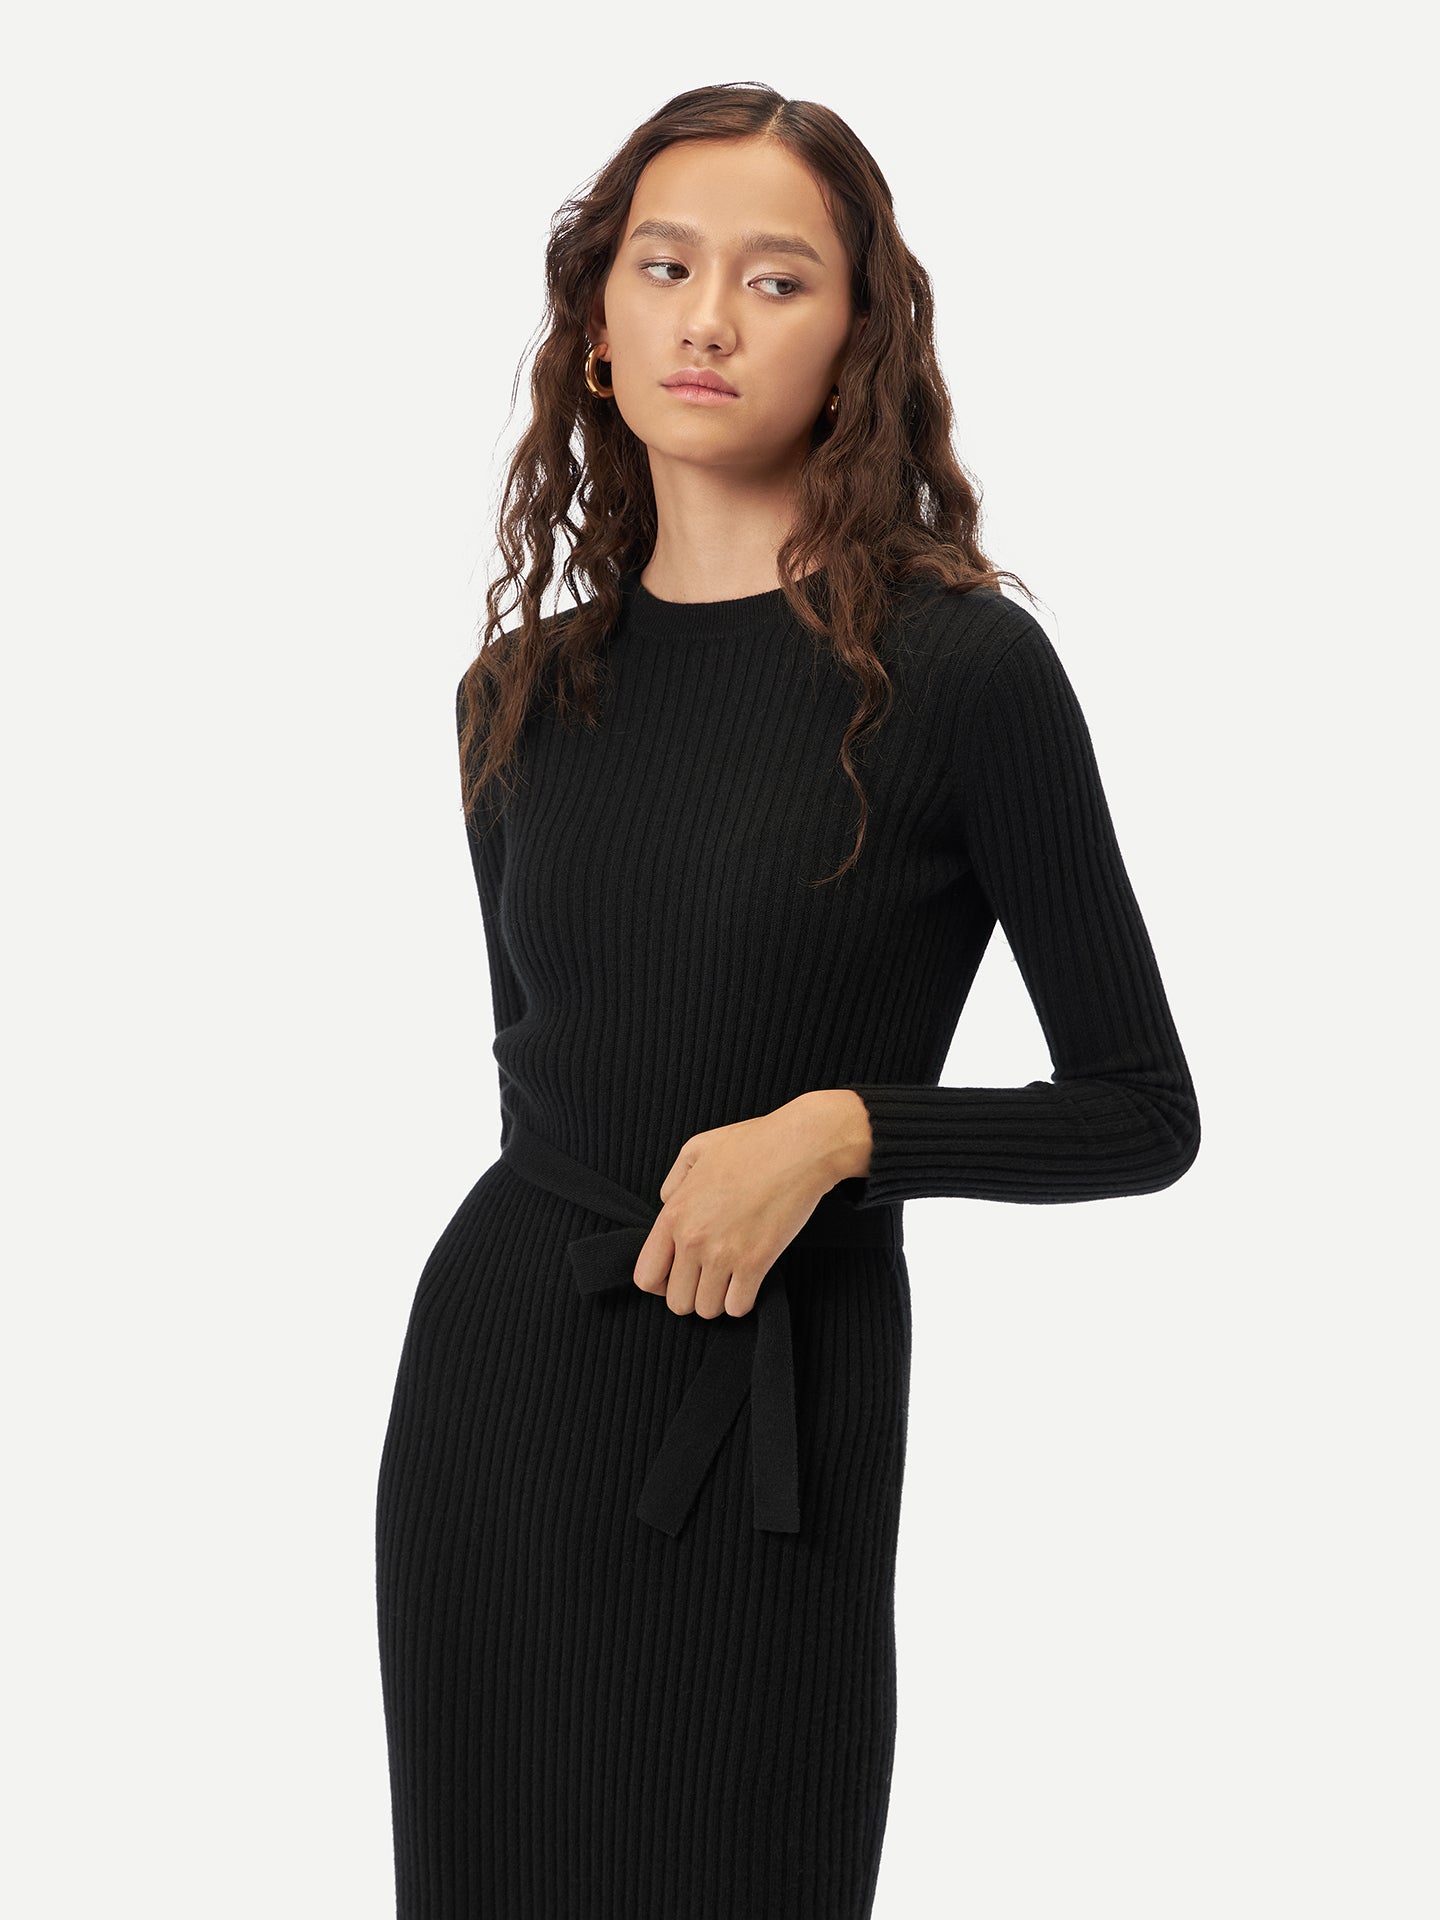 Women's Cashmere Knit Dress with Belt Black - Gobi Cashmere